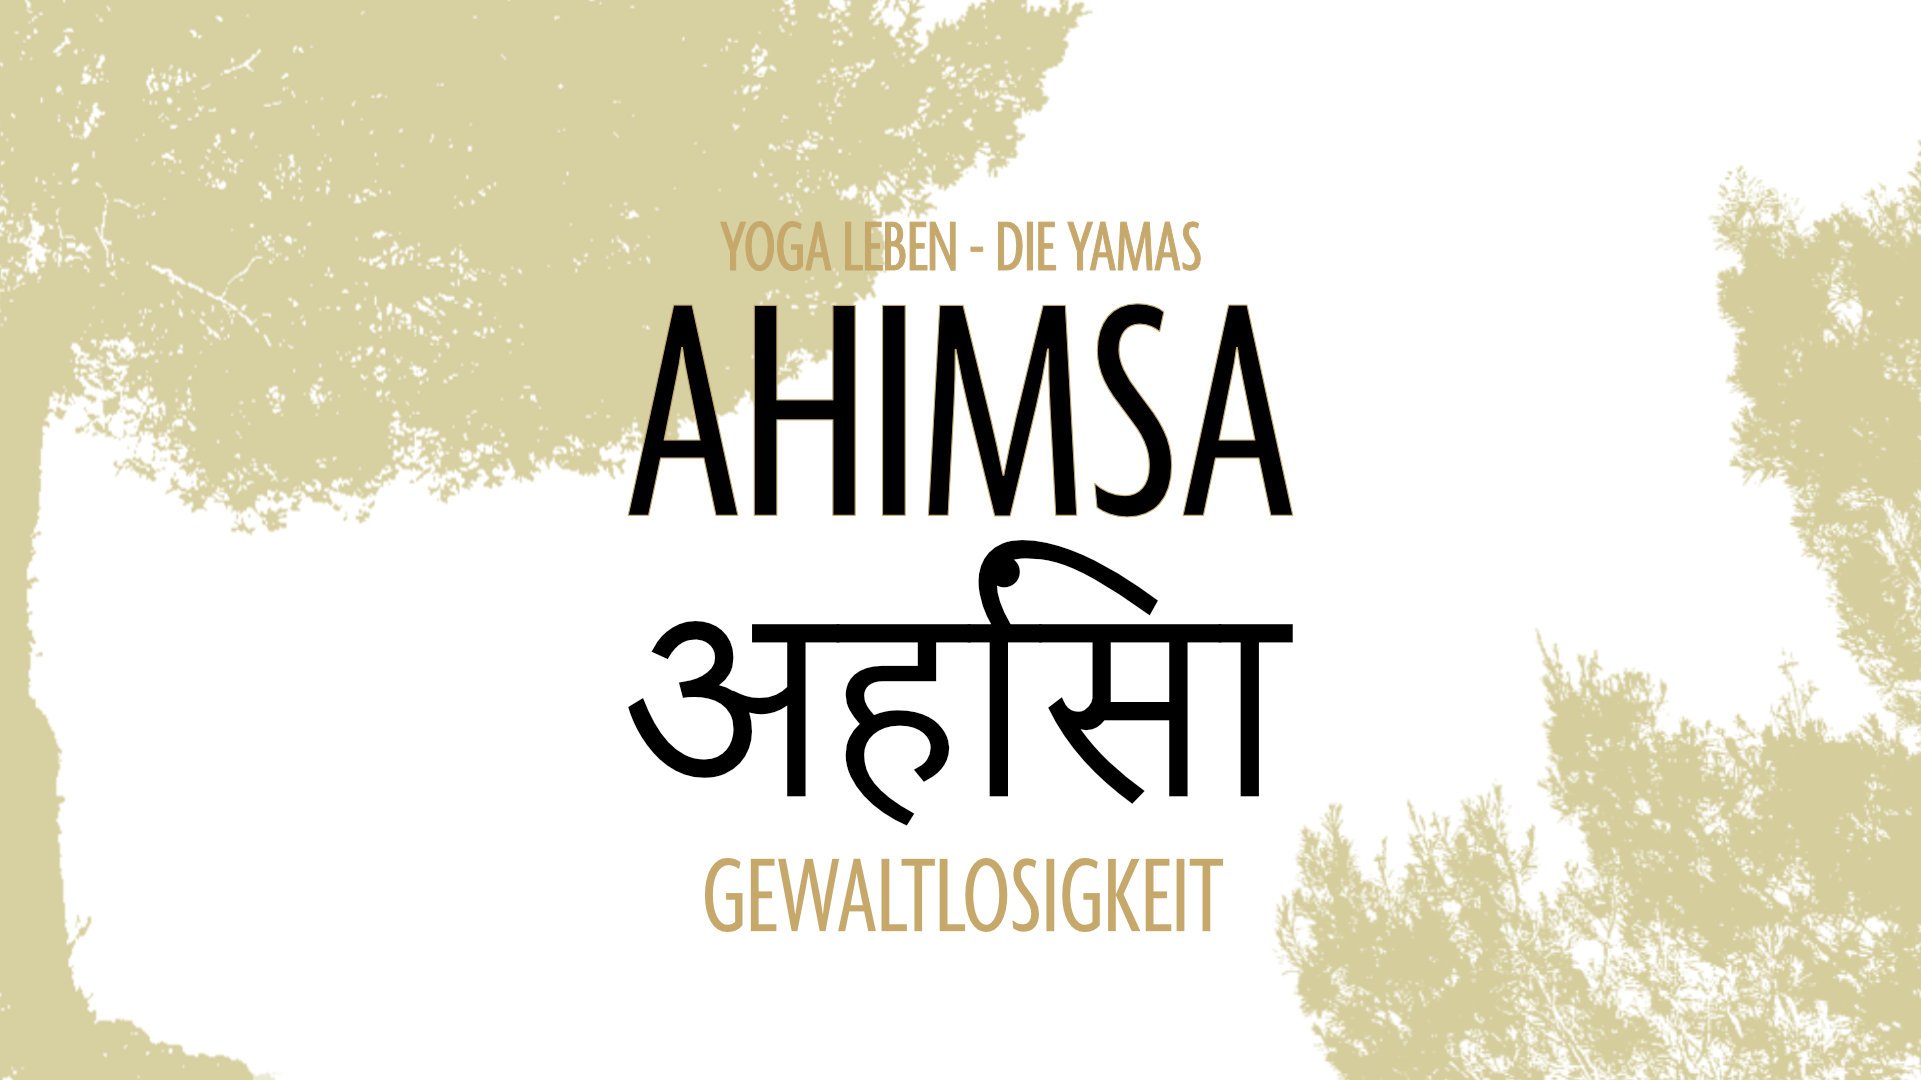 imme kock yoga die yamas workshop ahimsa.jpg